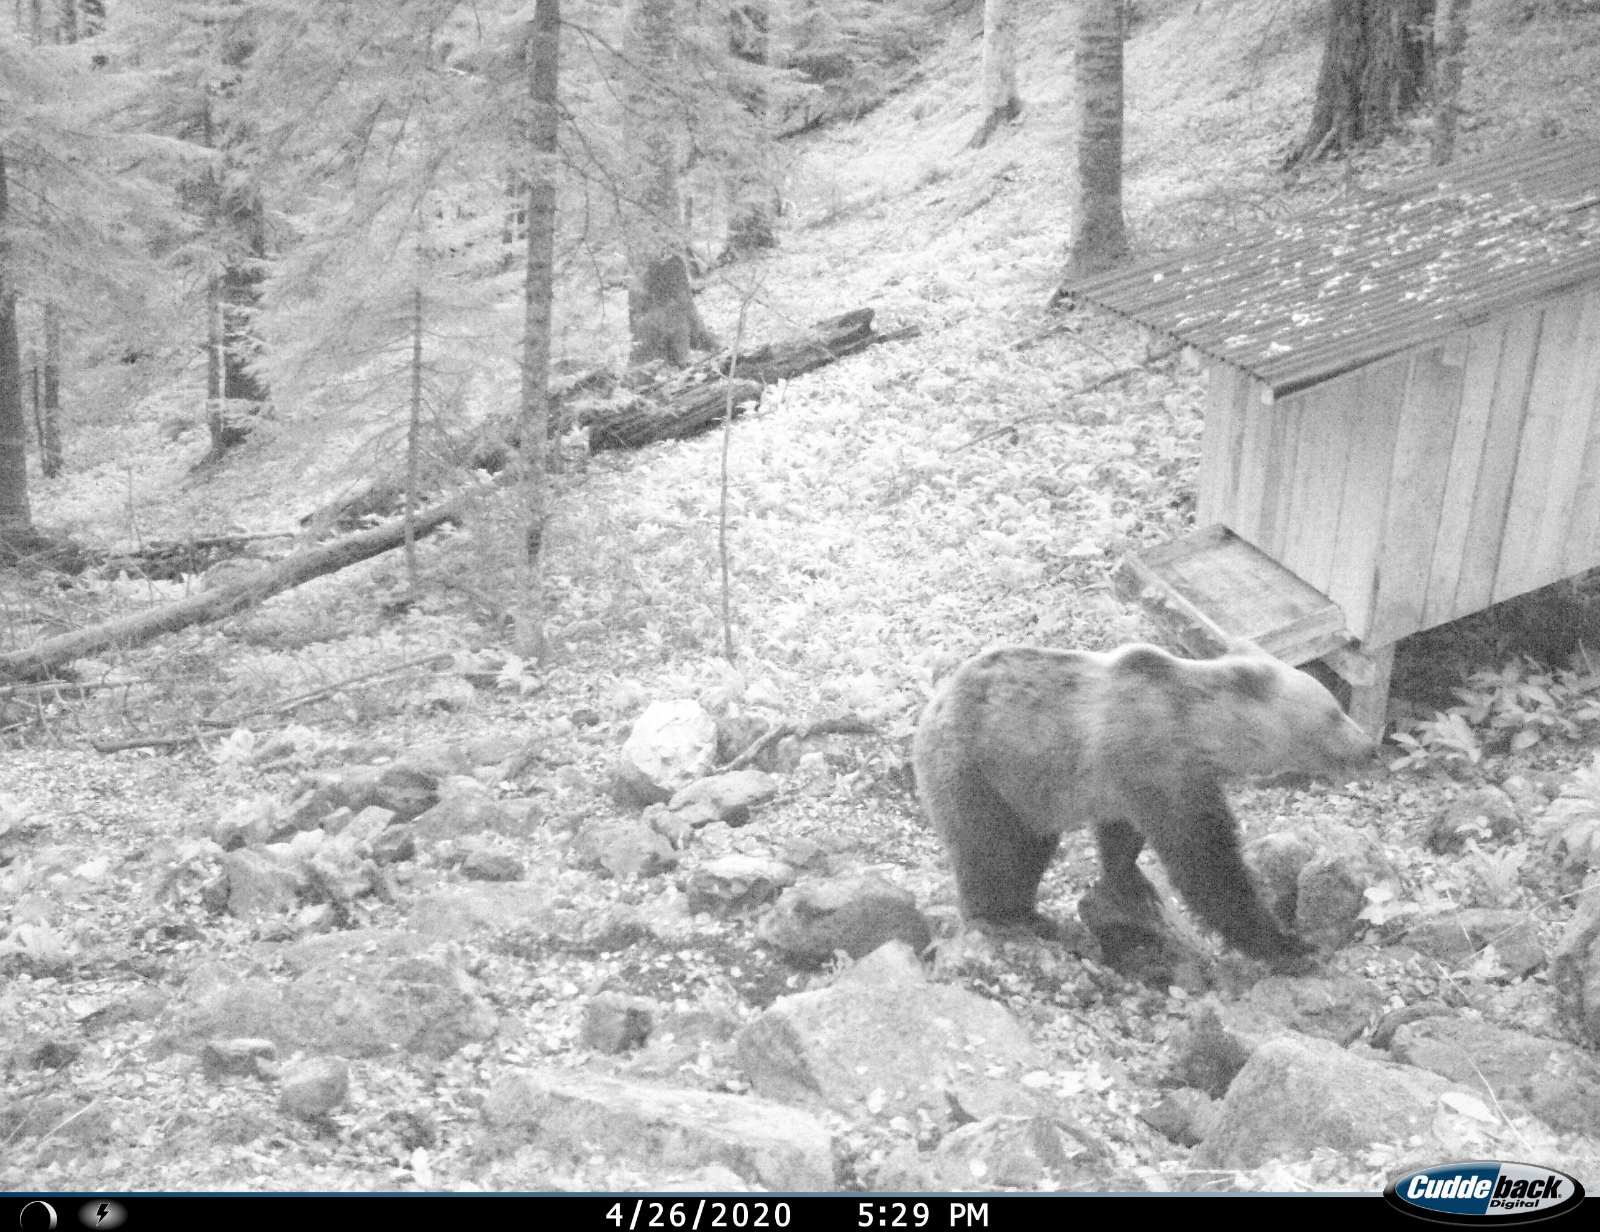 Beranca napao medved dok je brao kleku u šumi